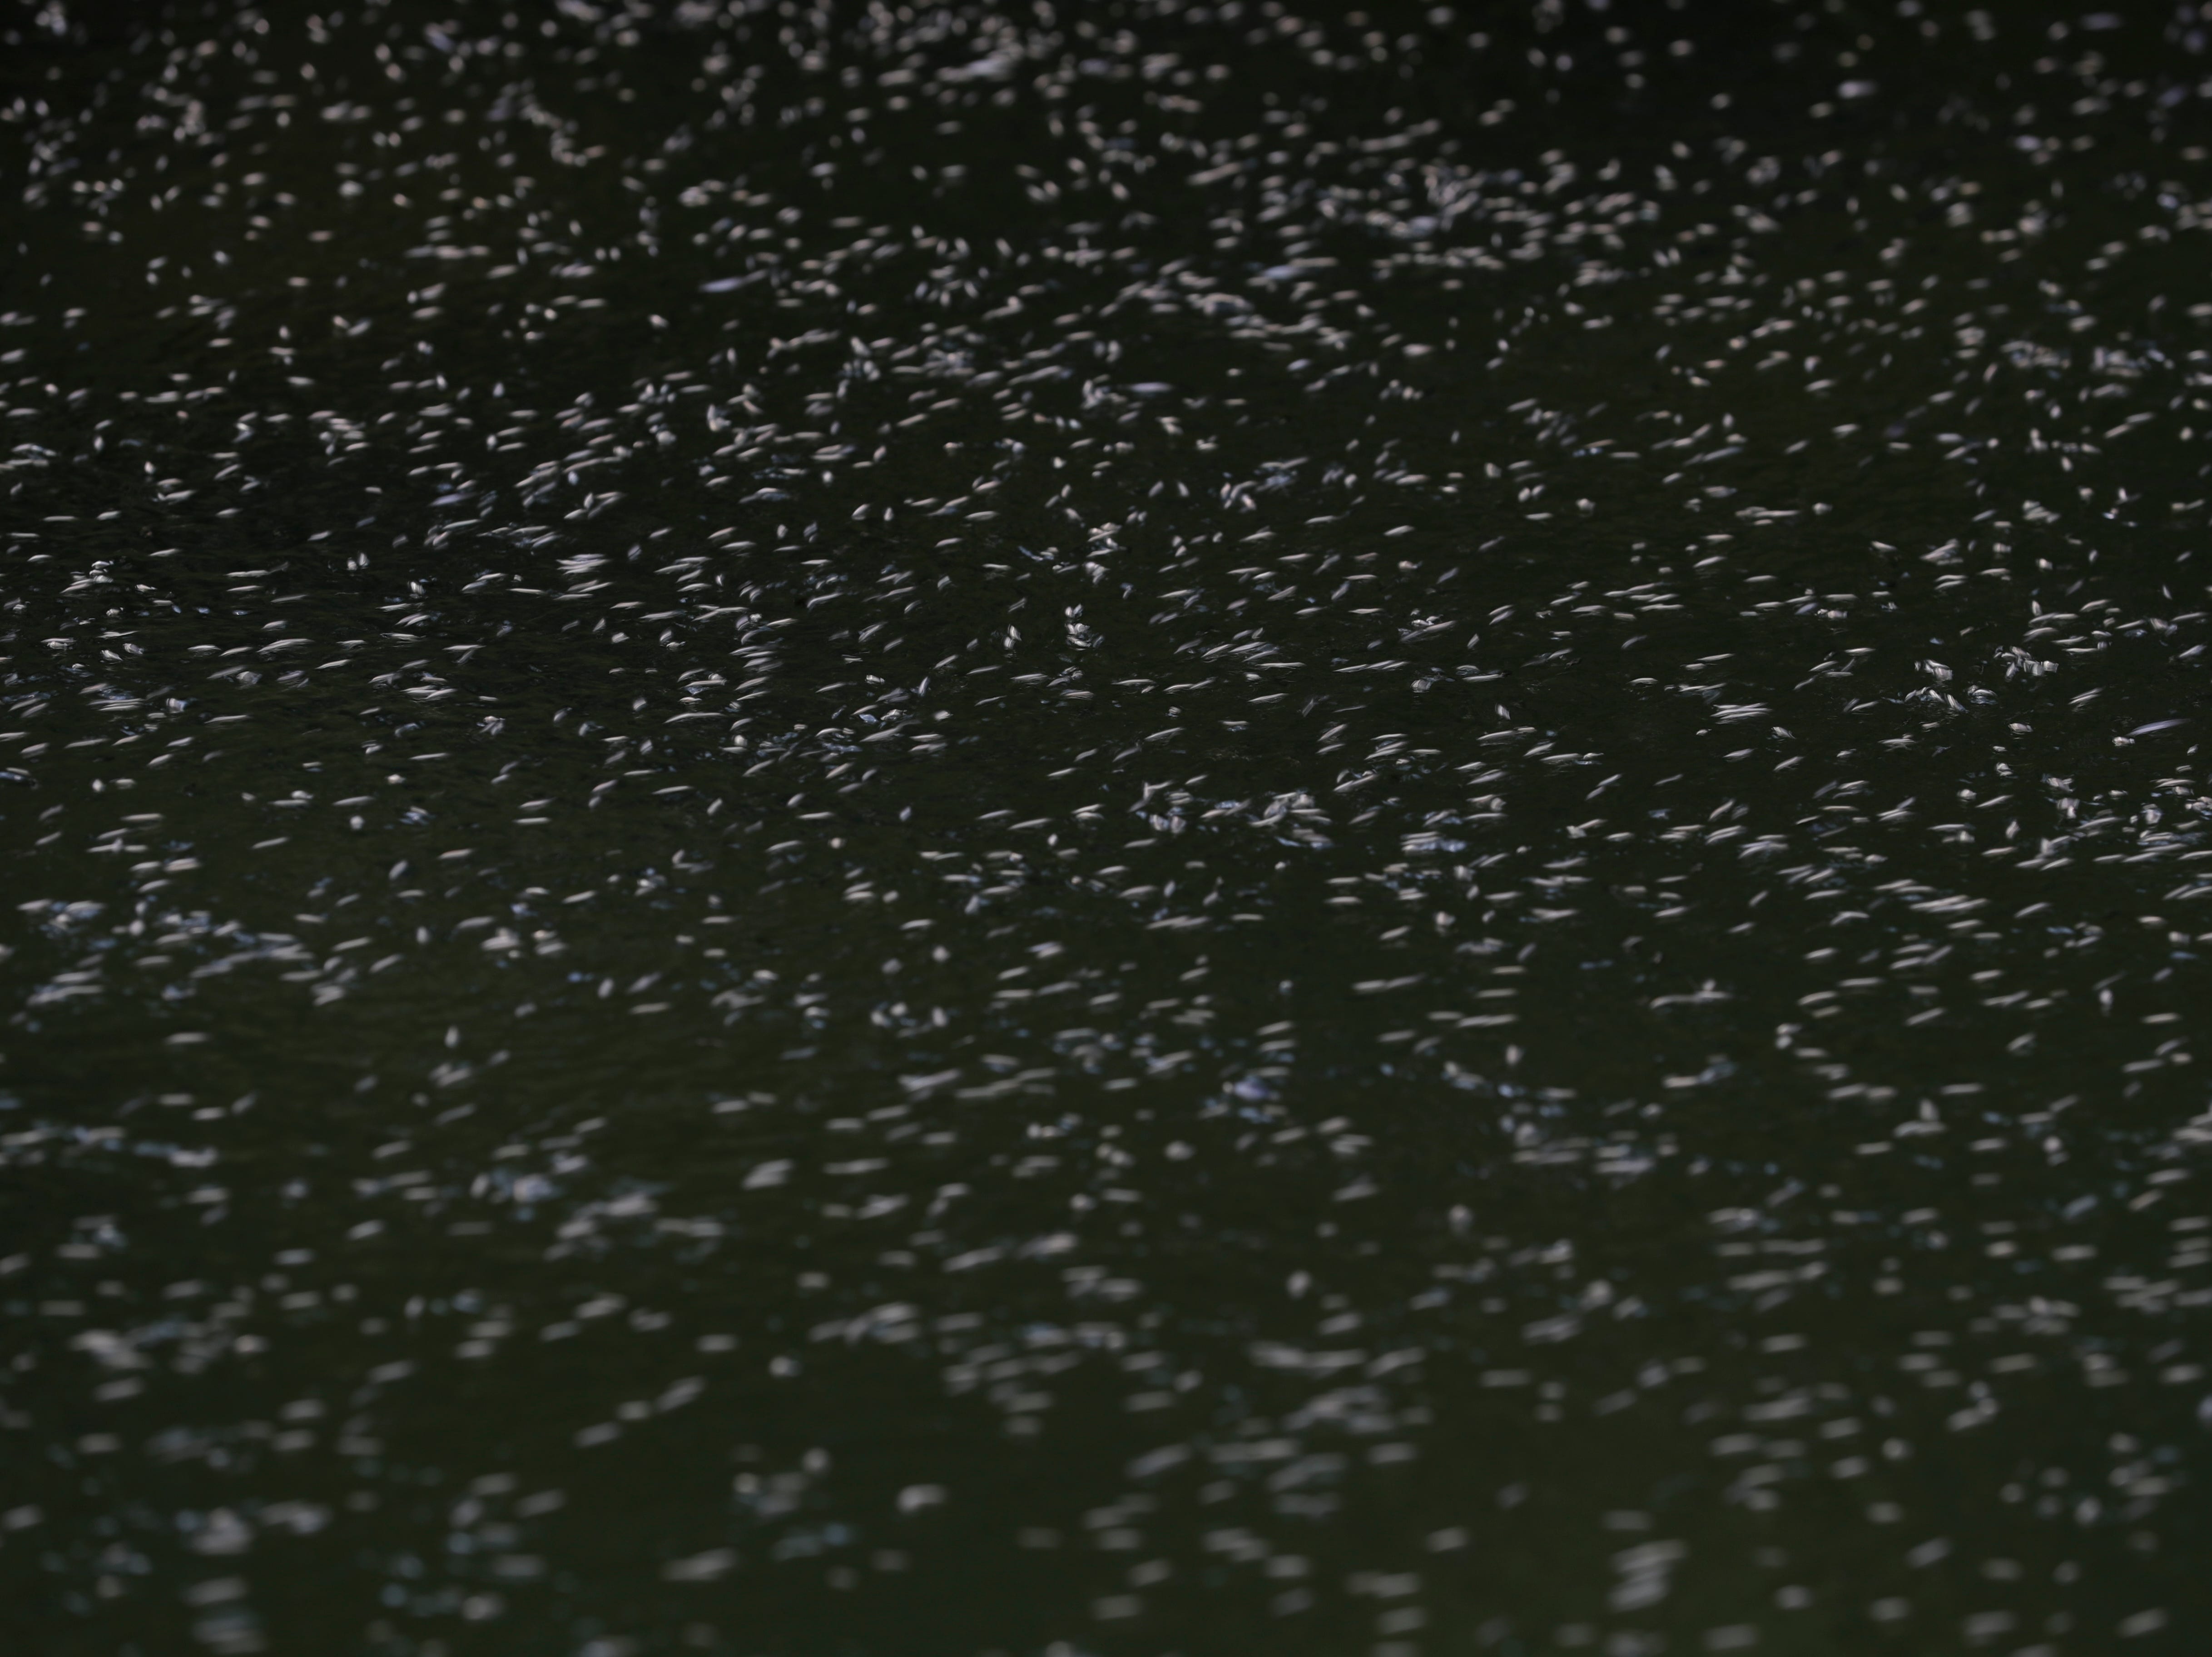 Bugs swim around on the surface of Wakulla Springs. 